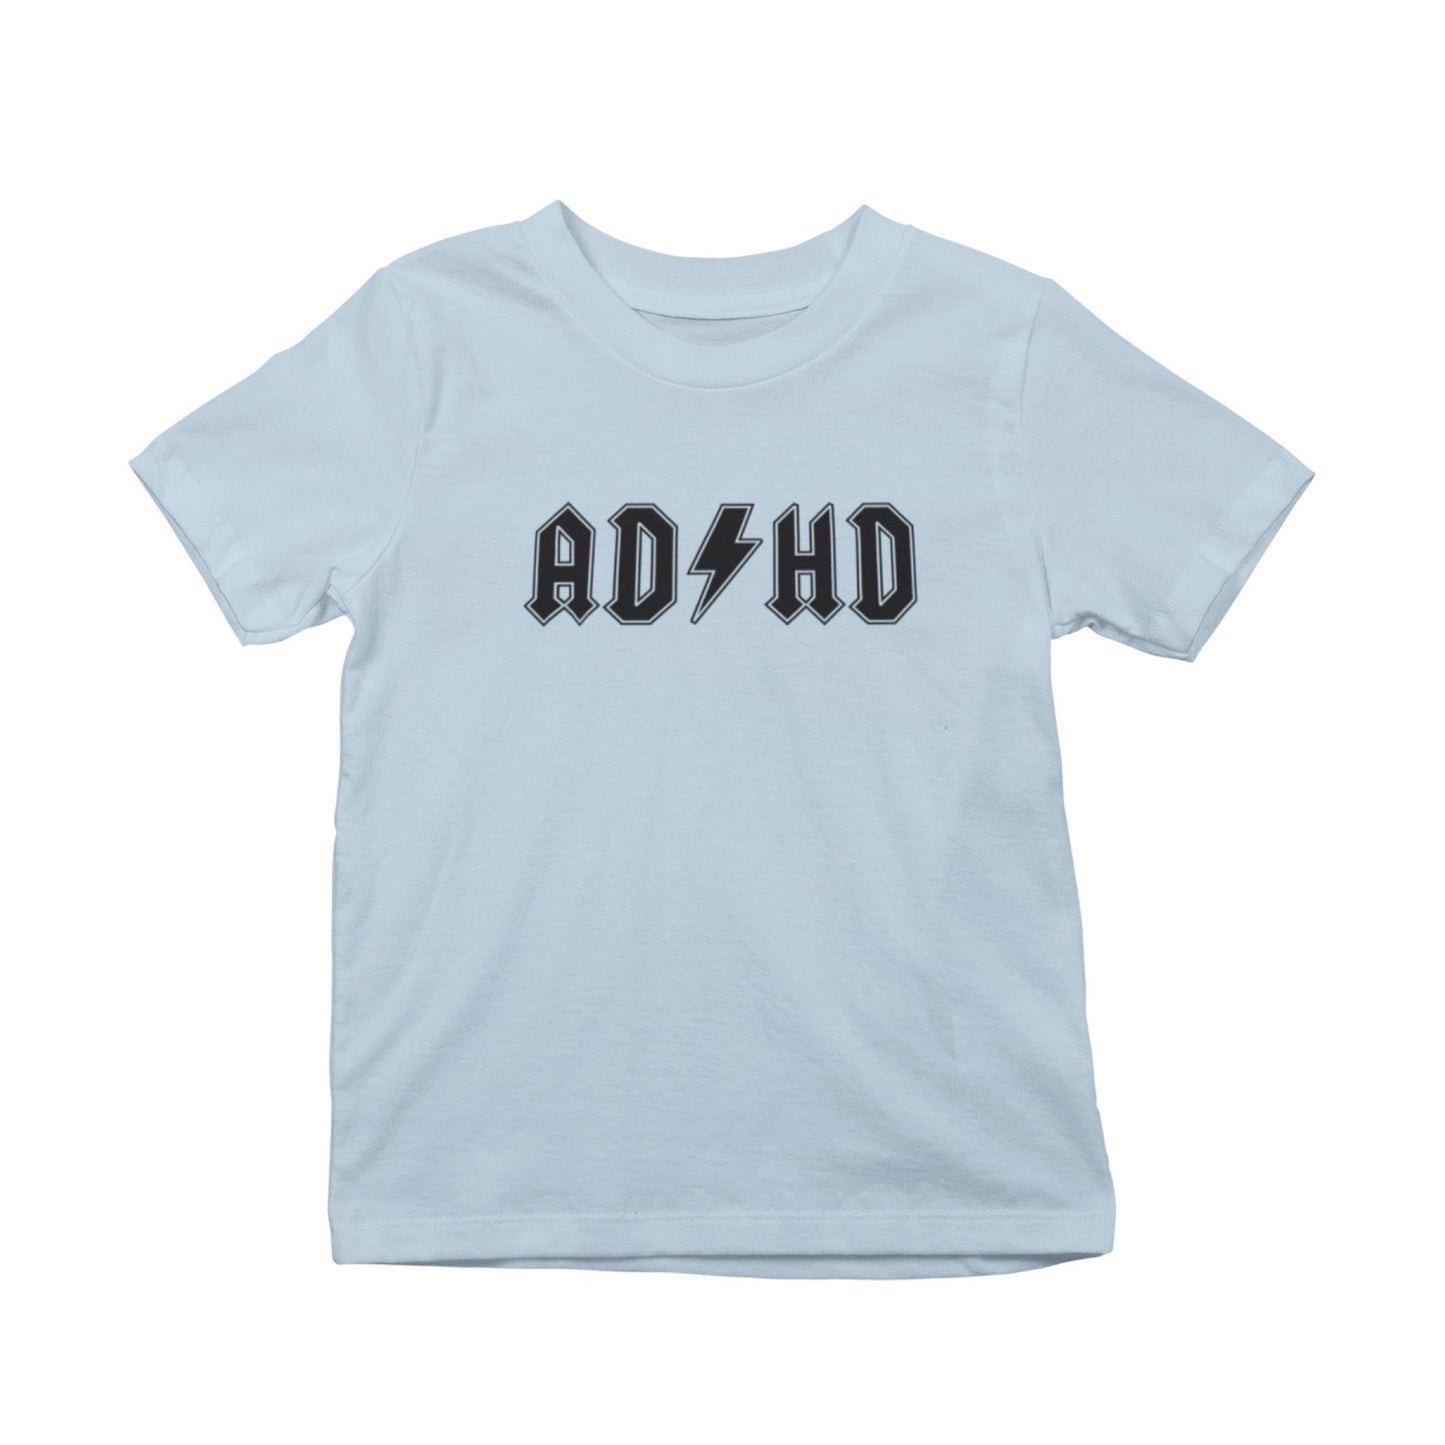 AD/HD T-Shirt